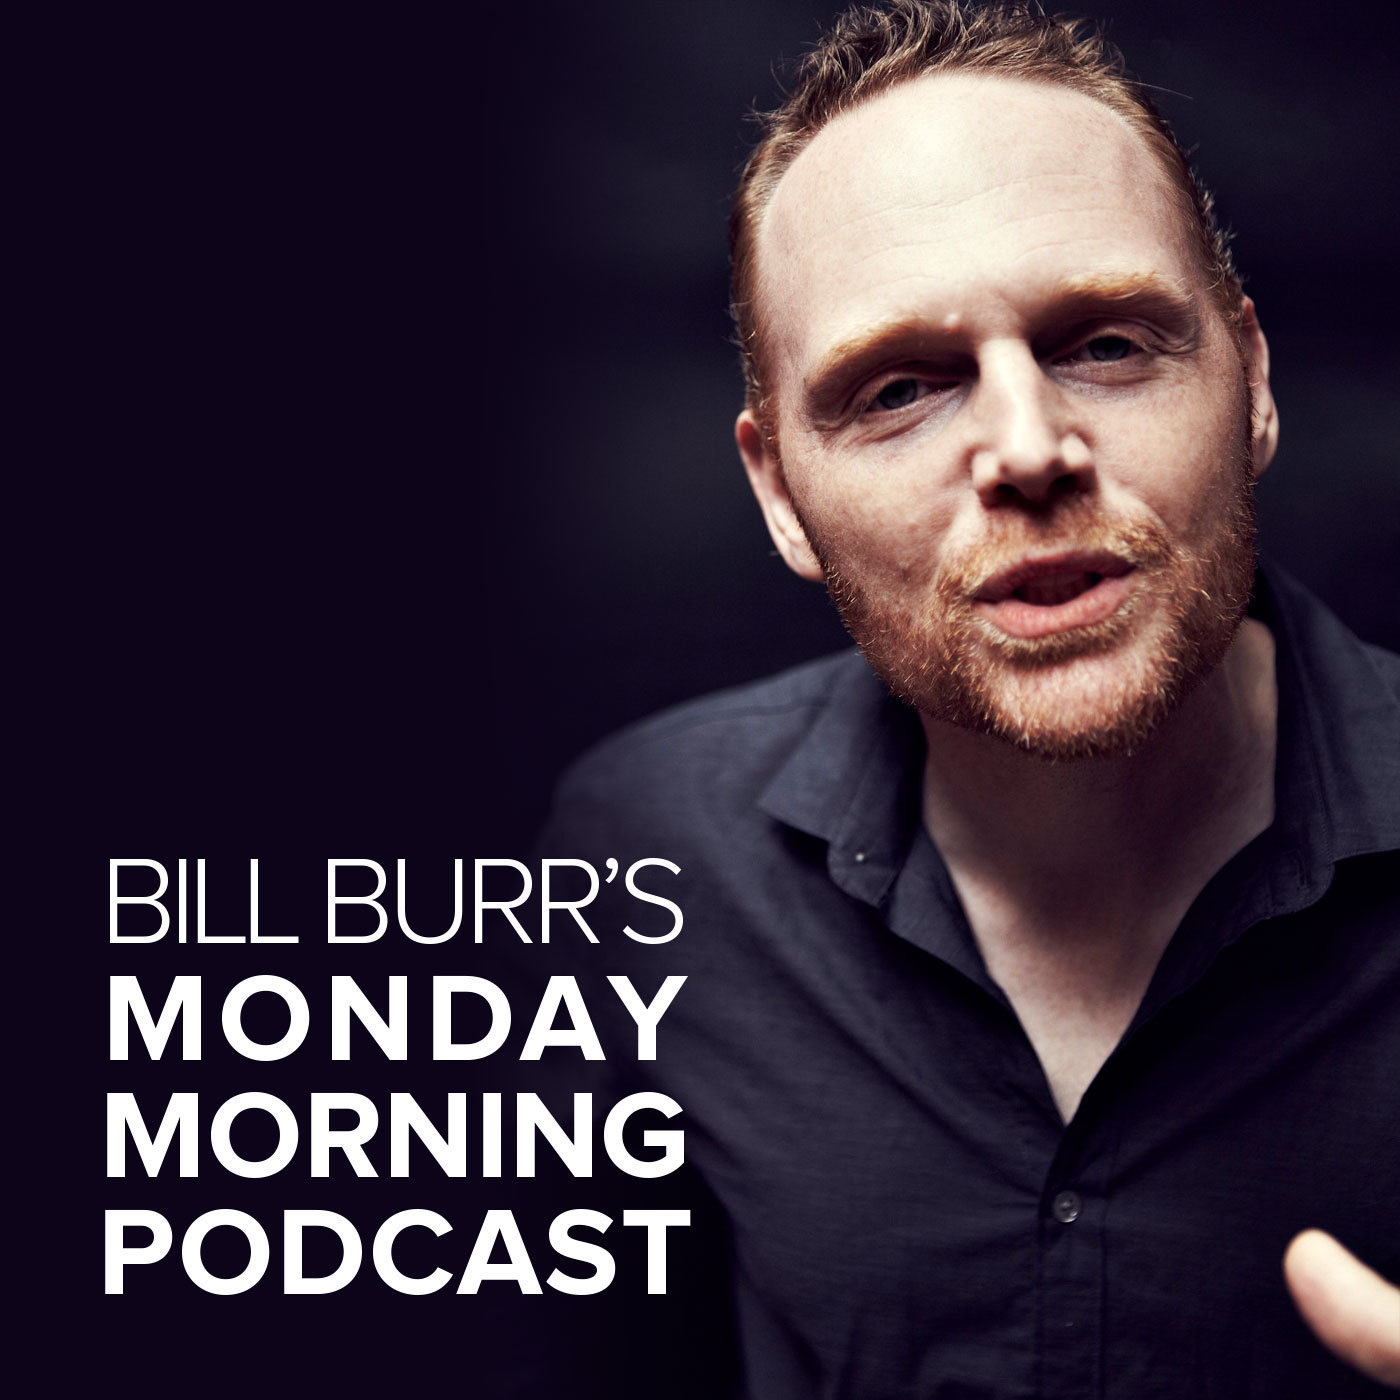 Monday Morning Podcast 12-19-11